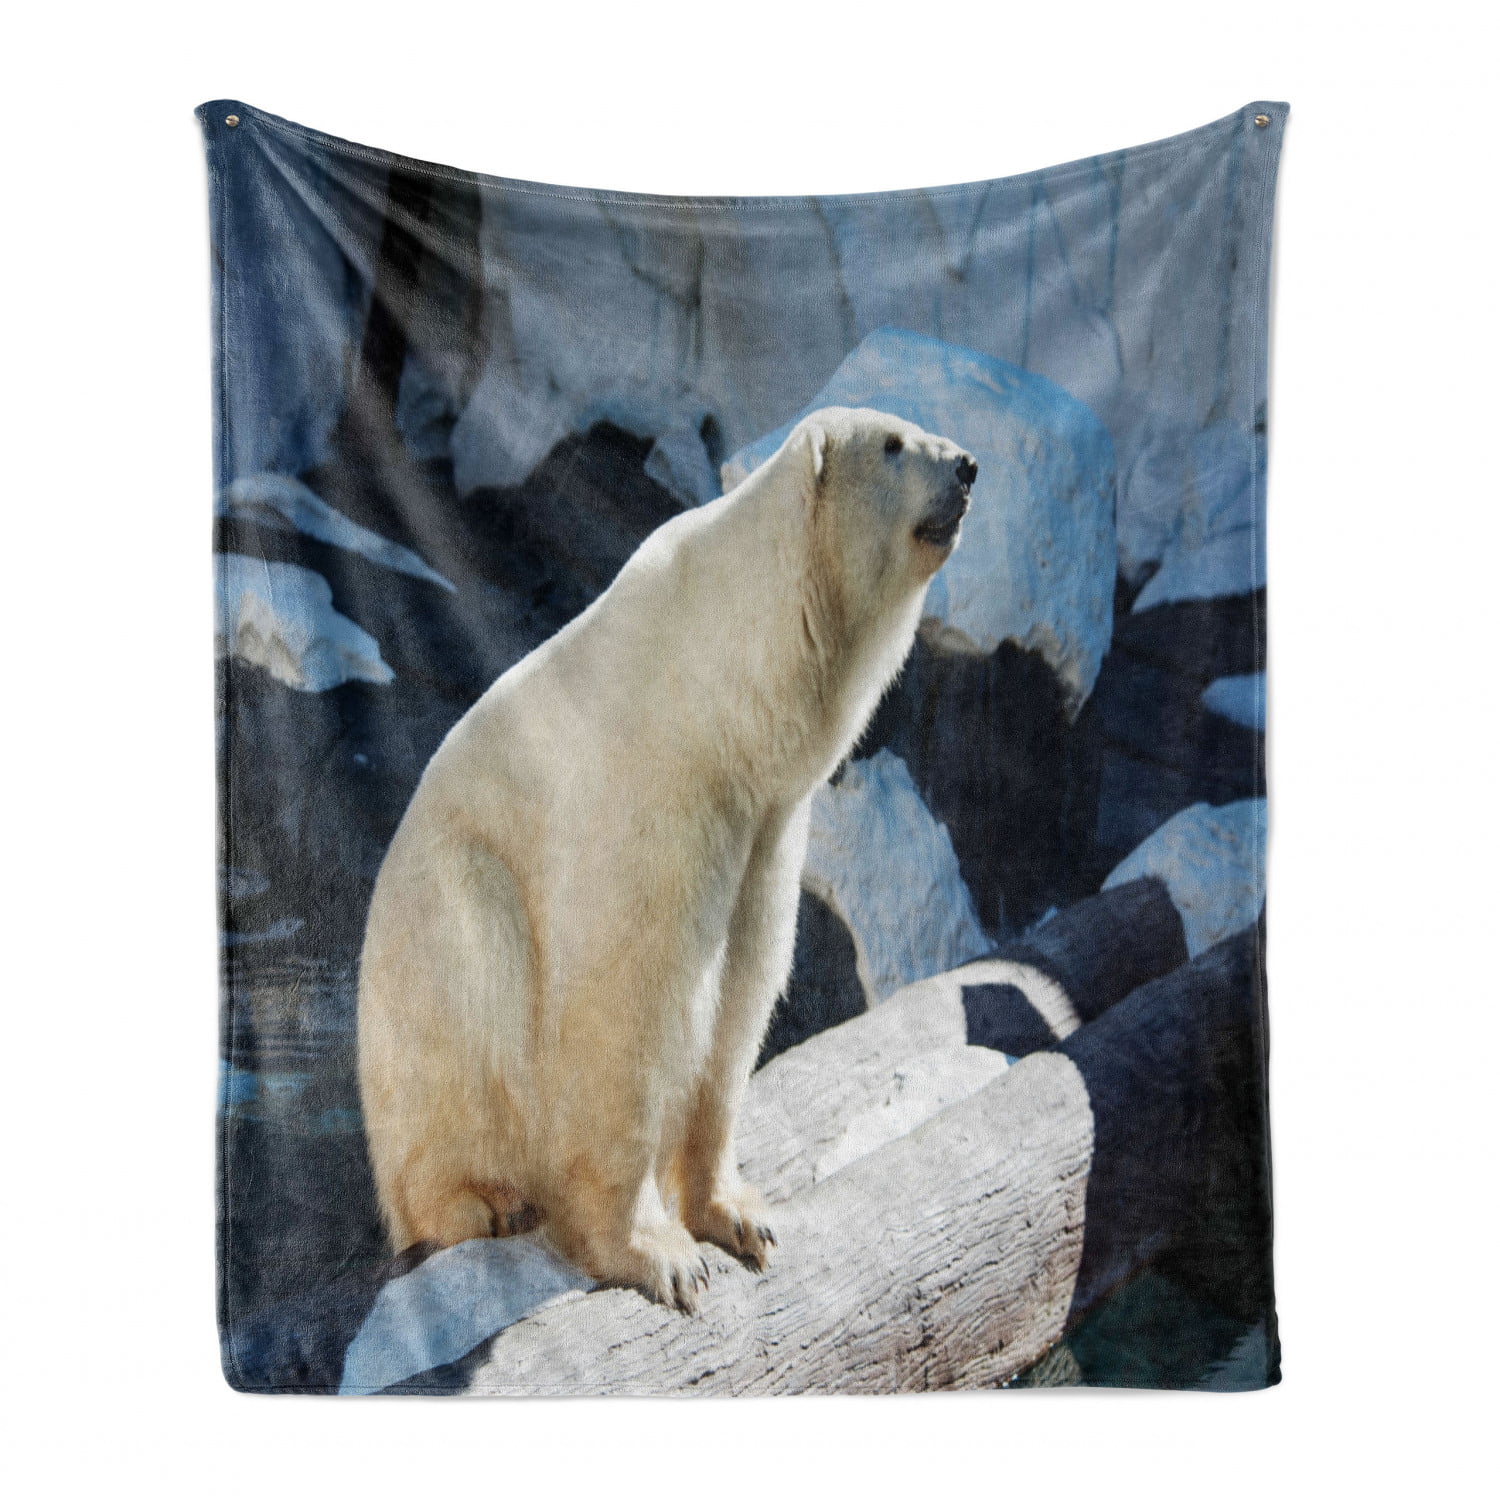 Original POLAR Bears montage Fleece throw Blanket 50" x 60" Licensed new 